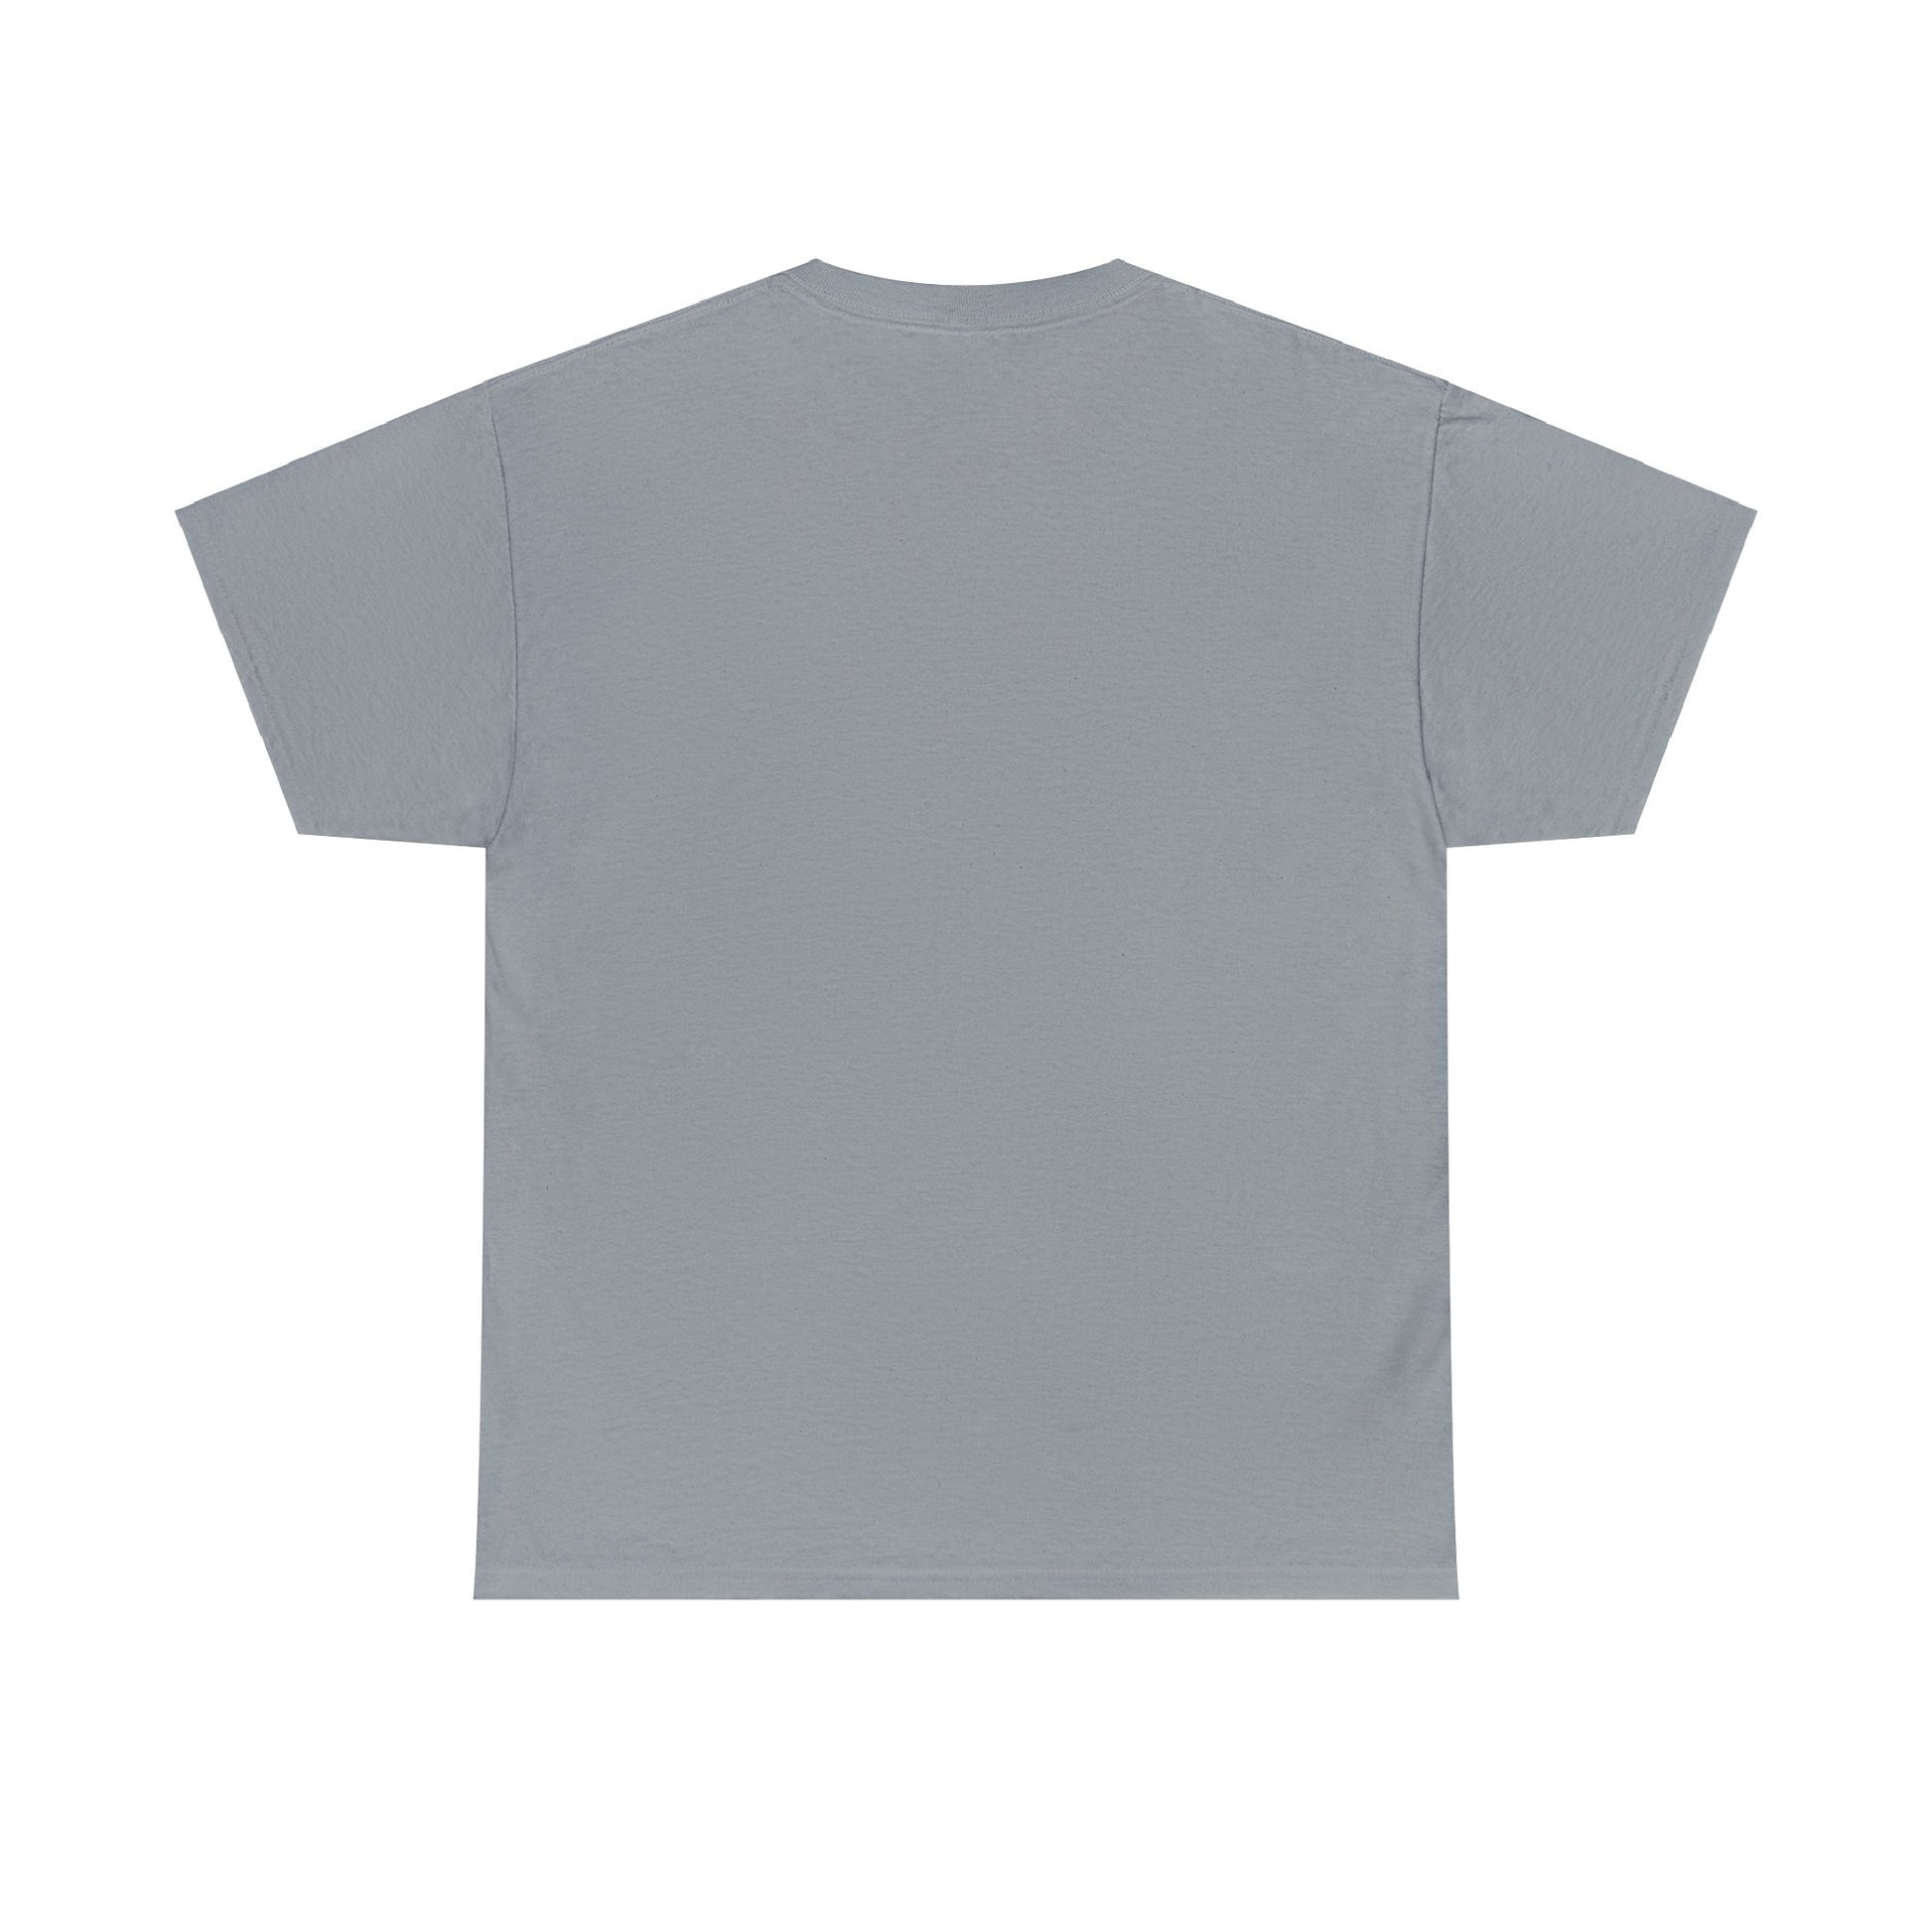 Gender Solid Unisex Heavy Cotton Tee-T-Shirt-PureDesignTees